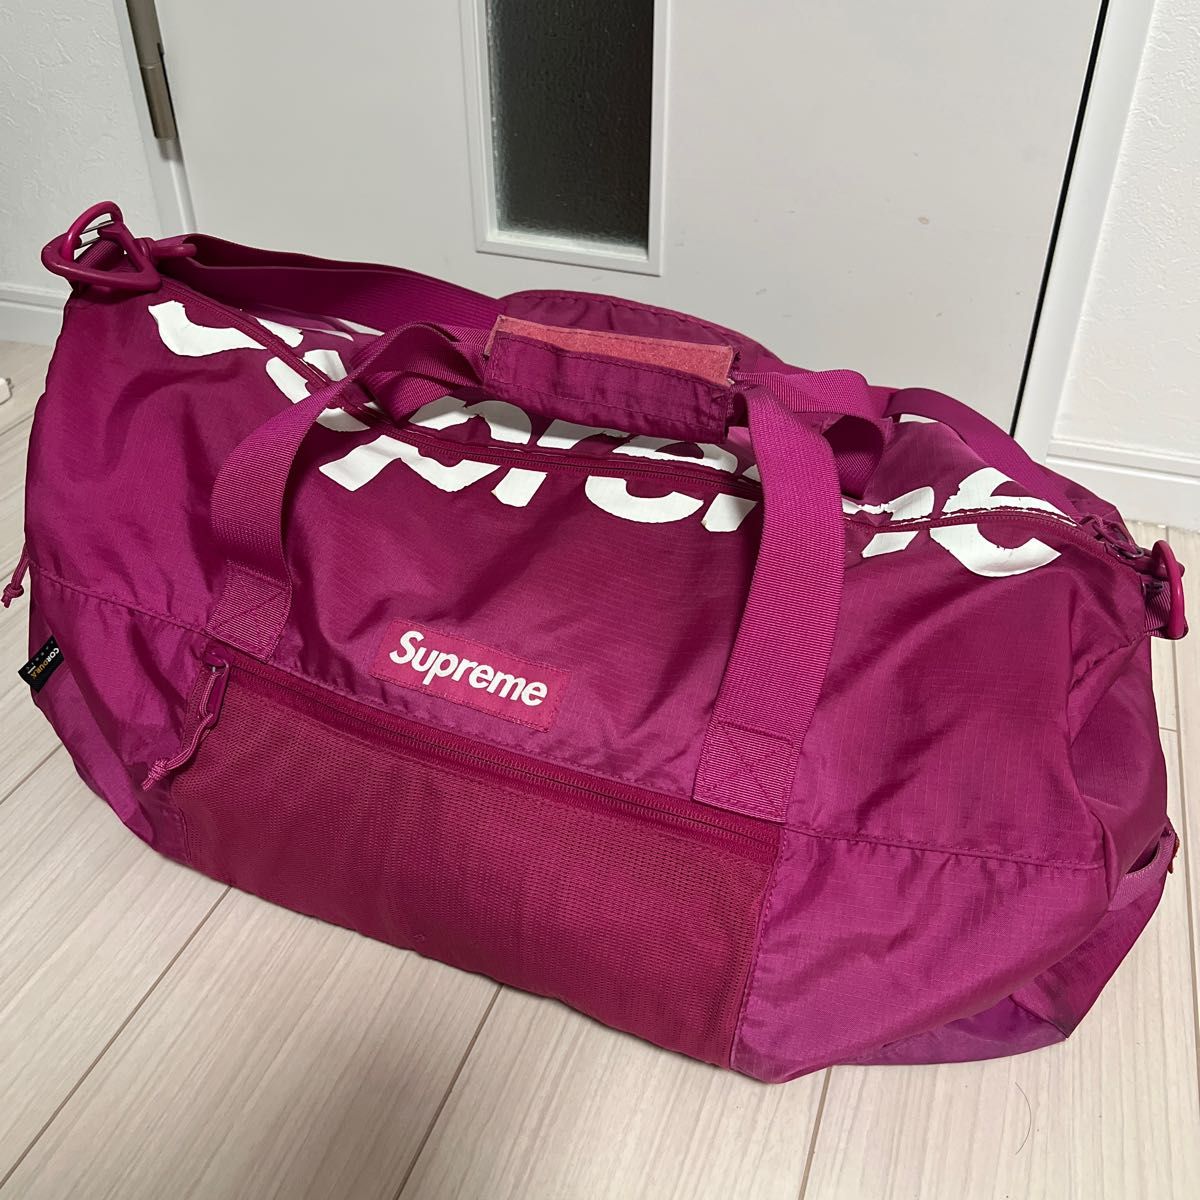 17SS Supreme Duffle Bag Magenta シュプリーム ダッフルバッグ ボストンバッグ マゼンダ 赤紫